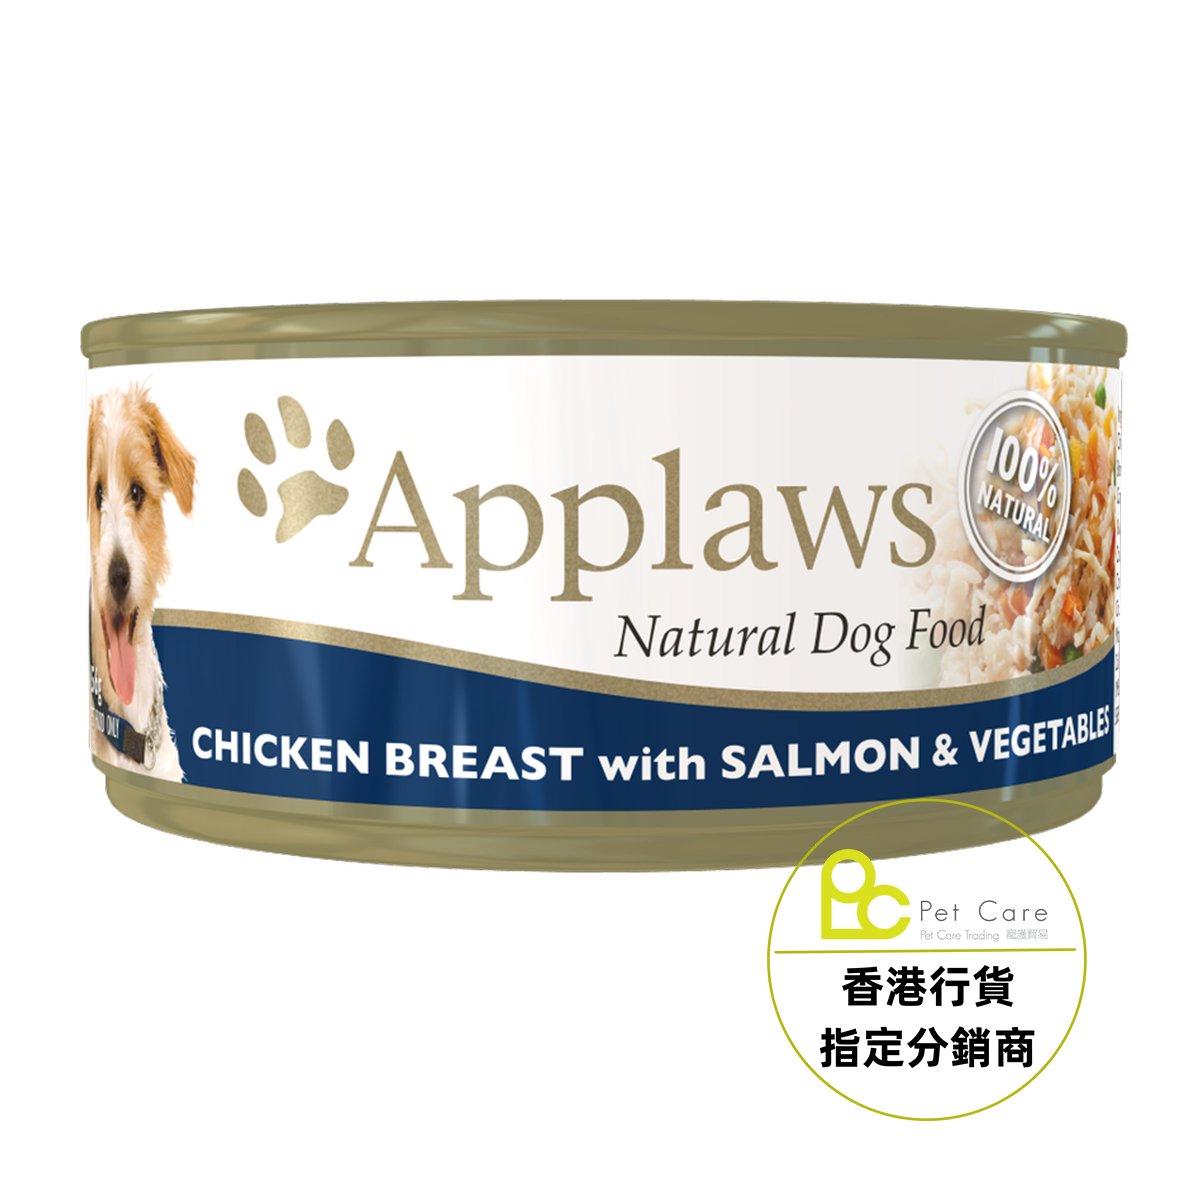 Applaws Dog 全天然 狗罐頭 -  雞胸 三文魚 蔬菜 156g